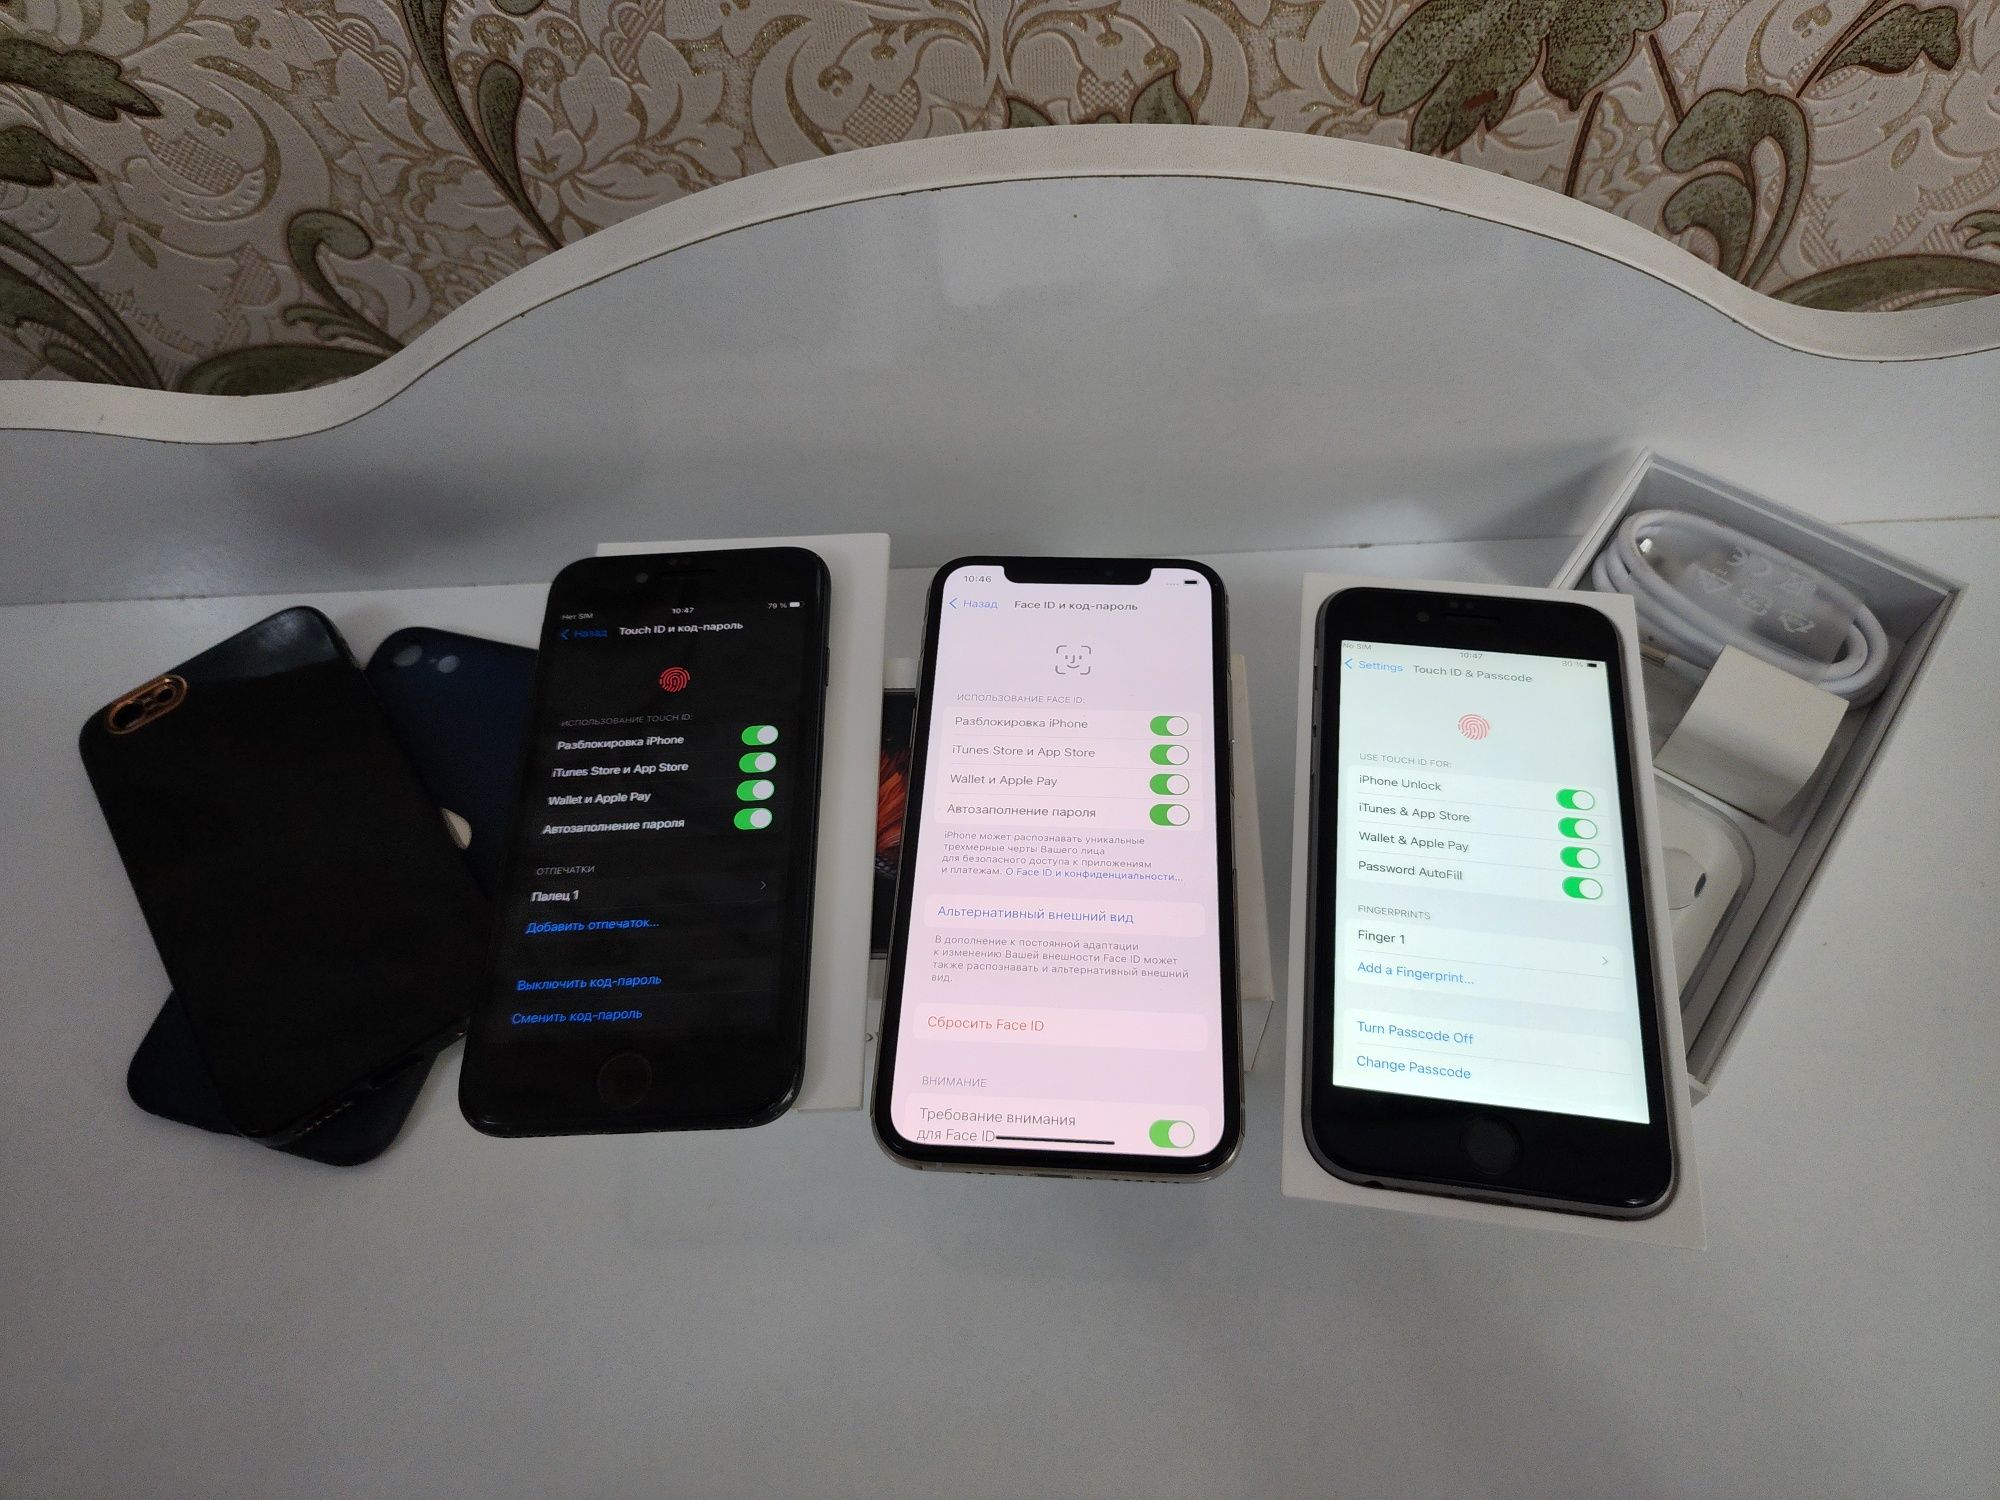 Iphone Xs 64Gb White Batareka 100% Uselenniy Ekran Korpus Zavod Radnoy